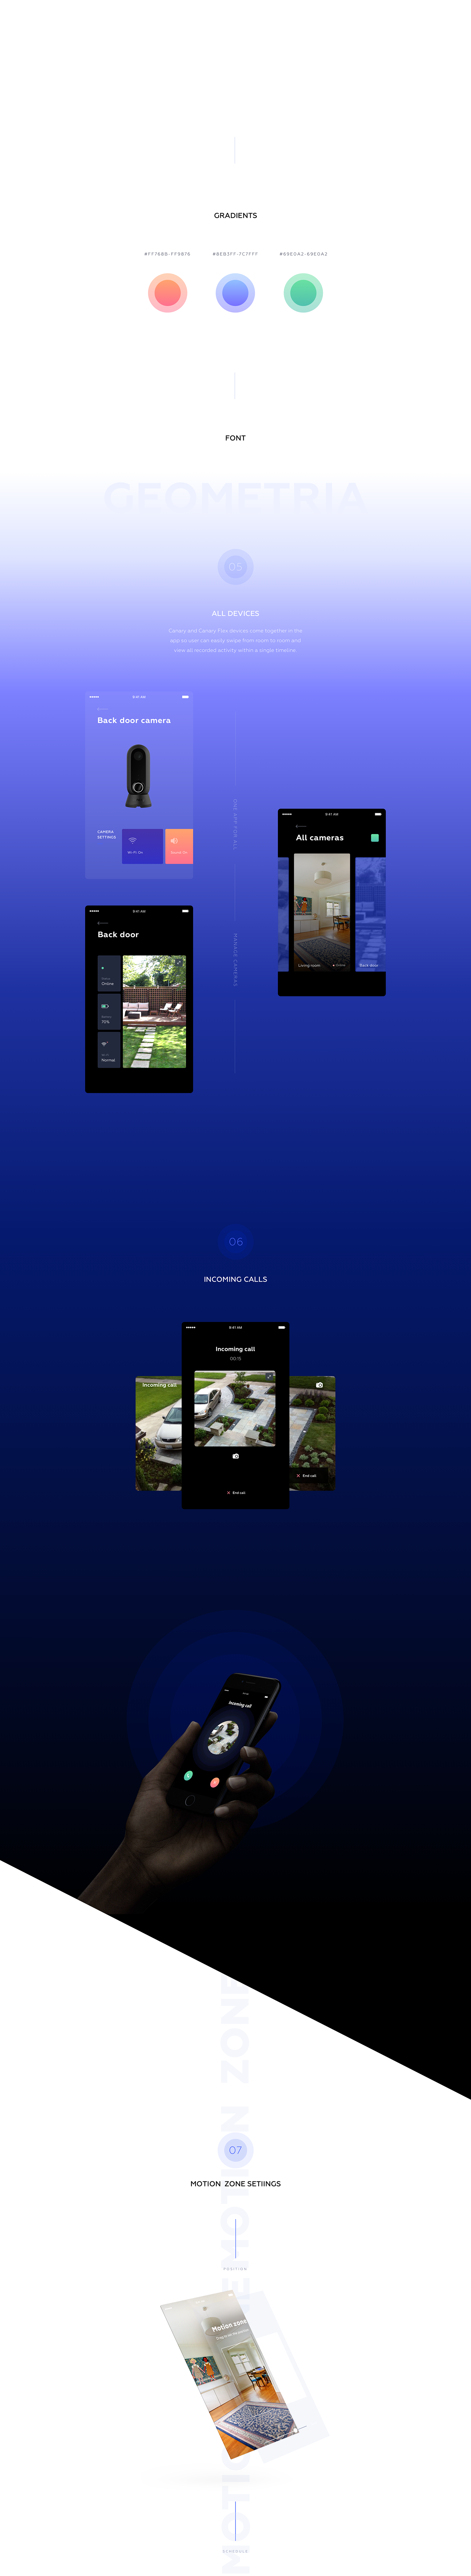 ux UI app Smart Home IoT Secure camera visual